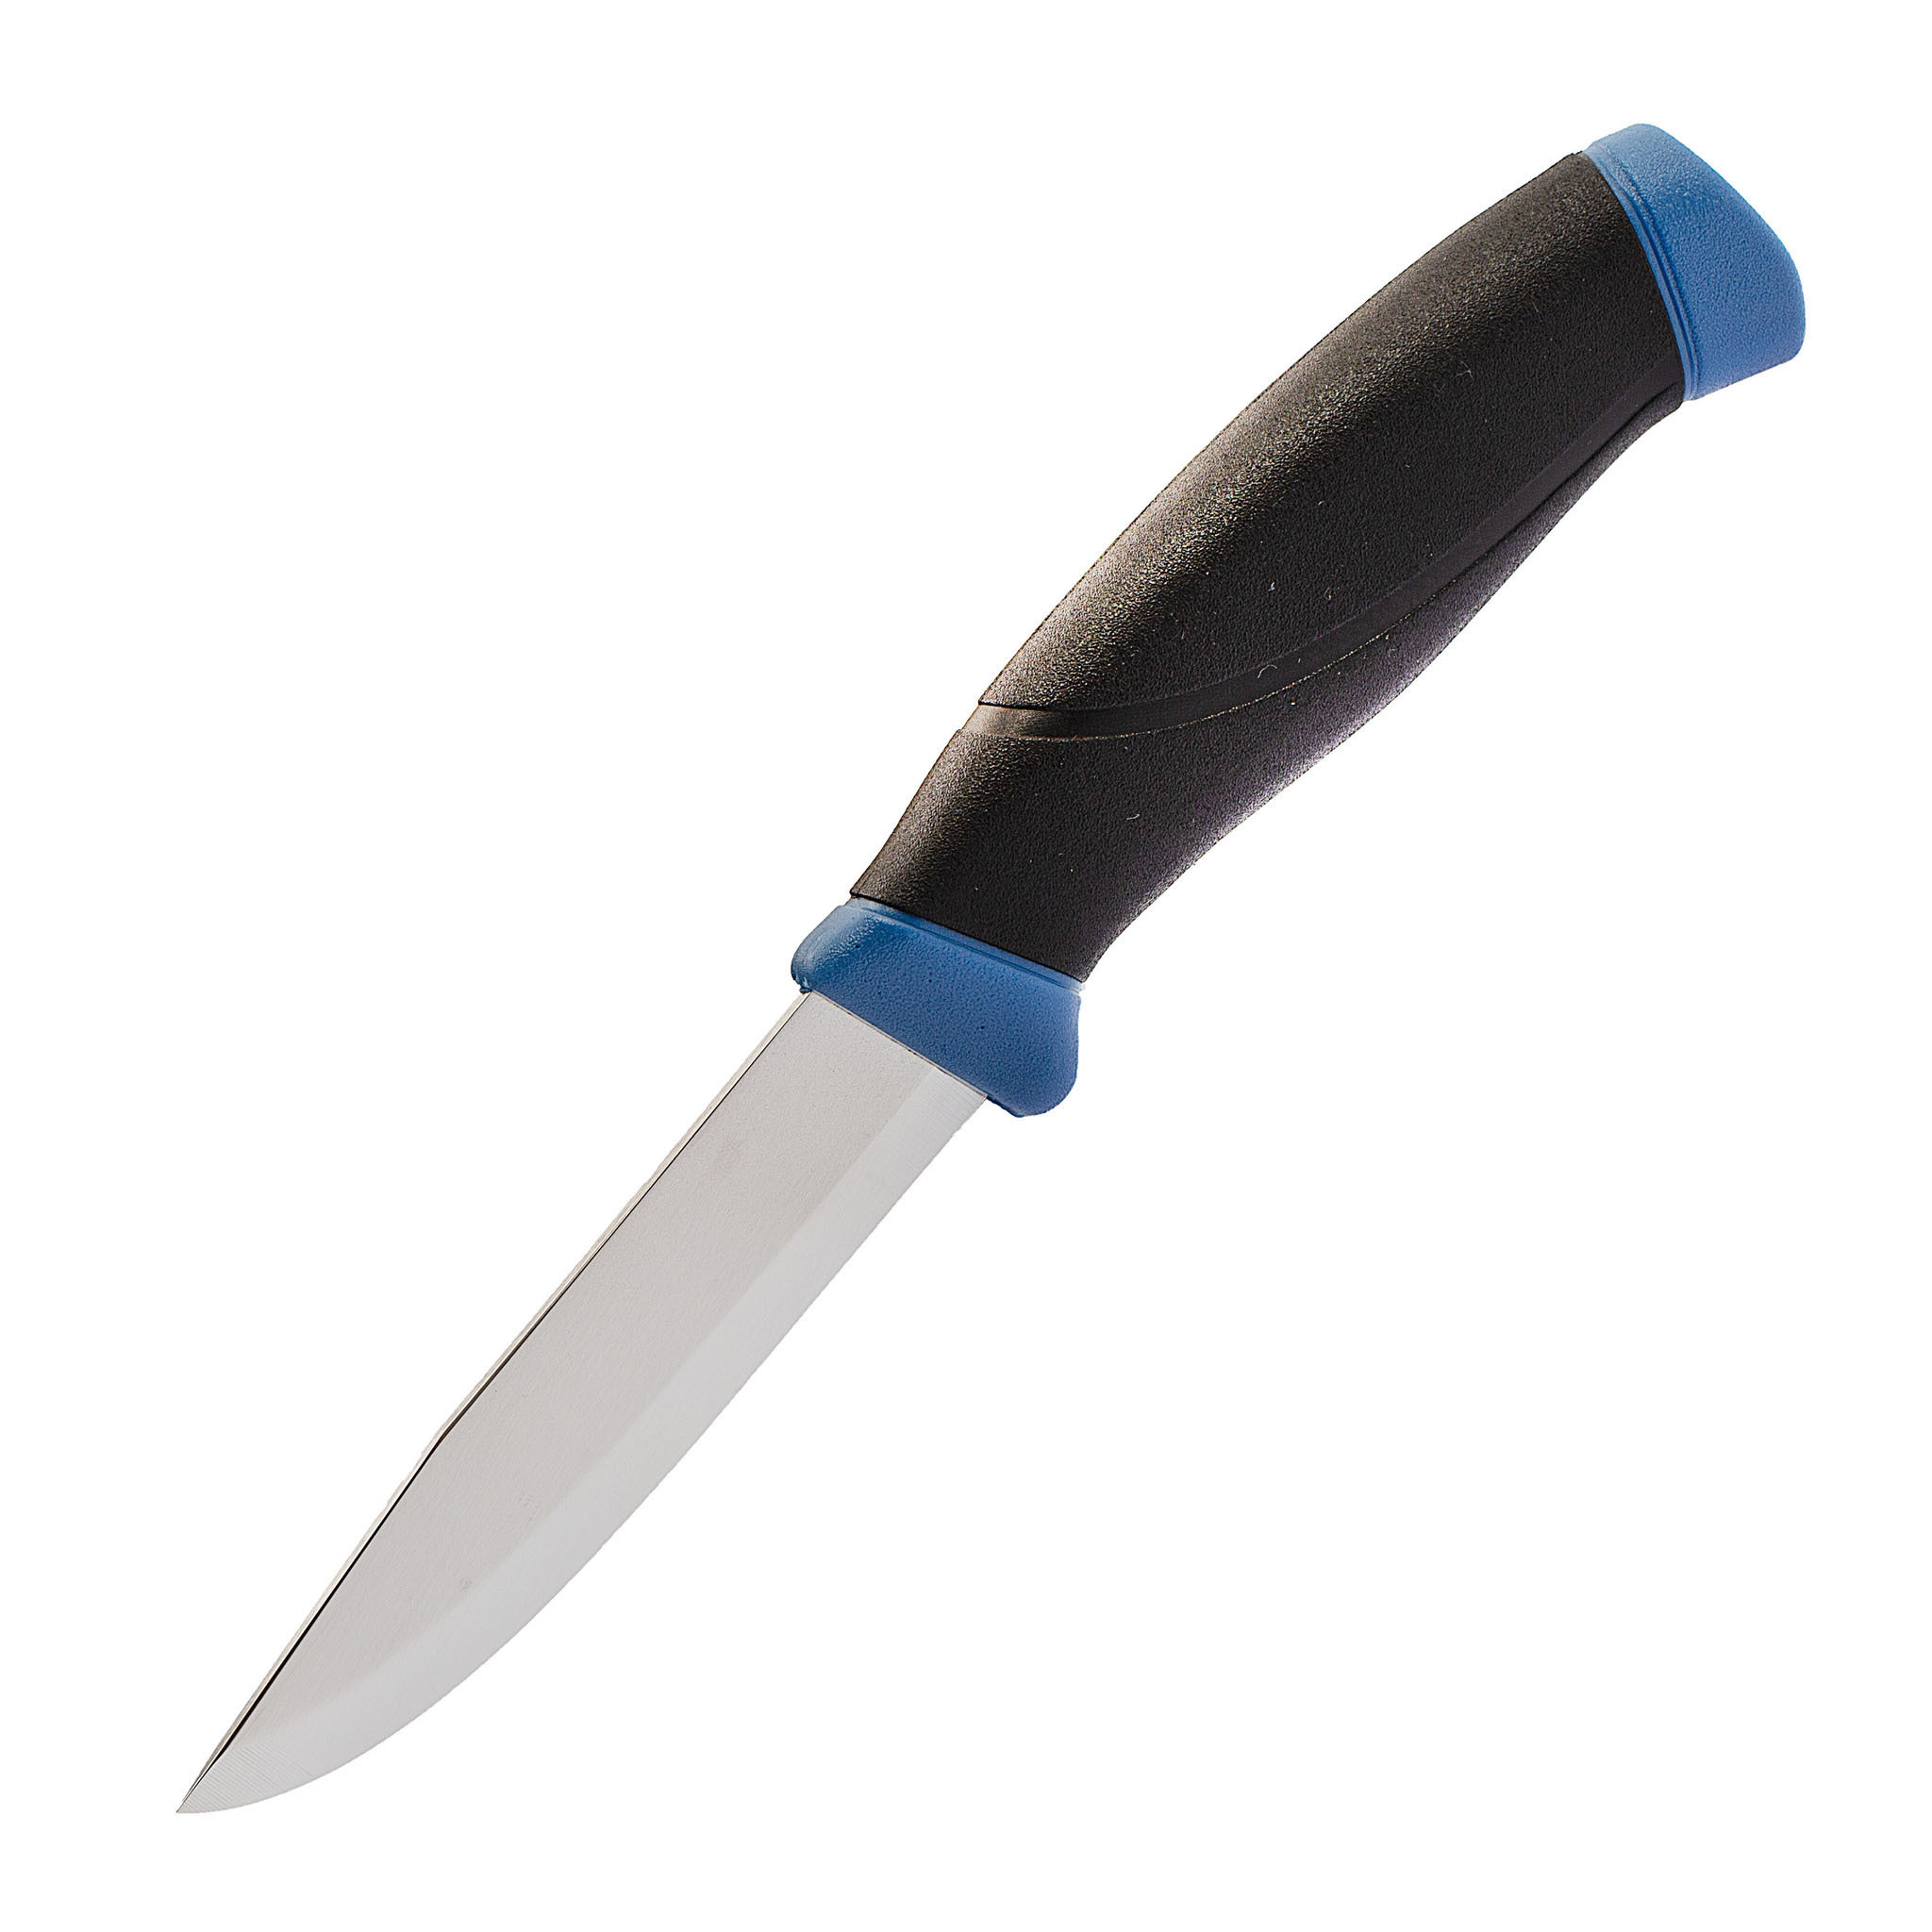 Mora Companion 13164 Navy Blue, bushcraft knife